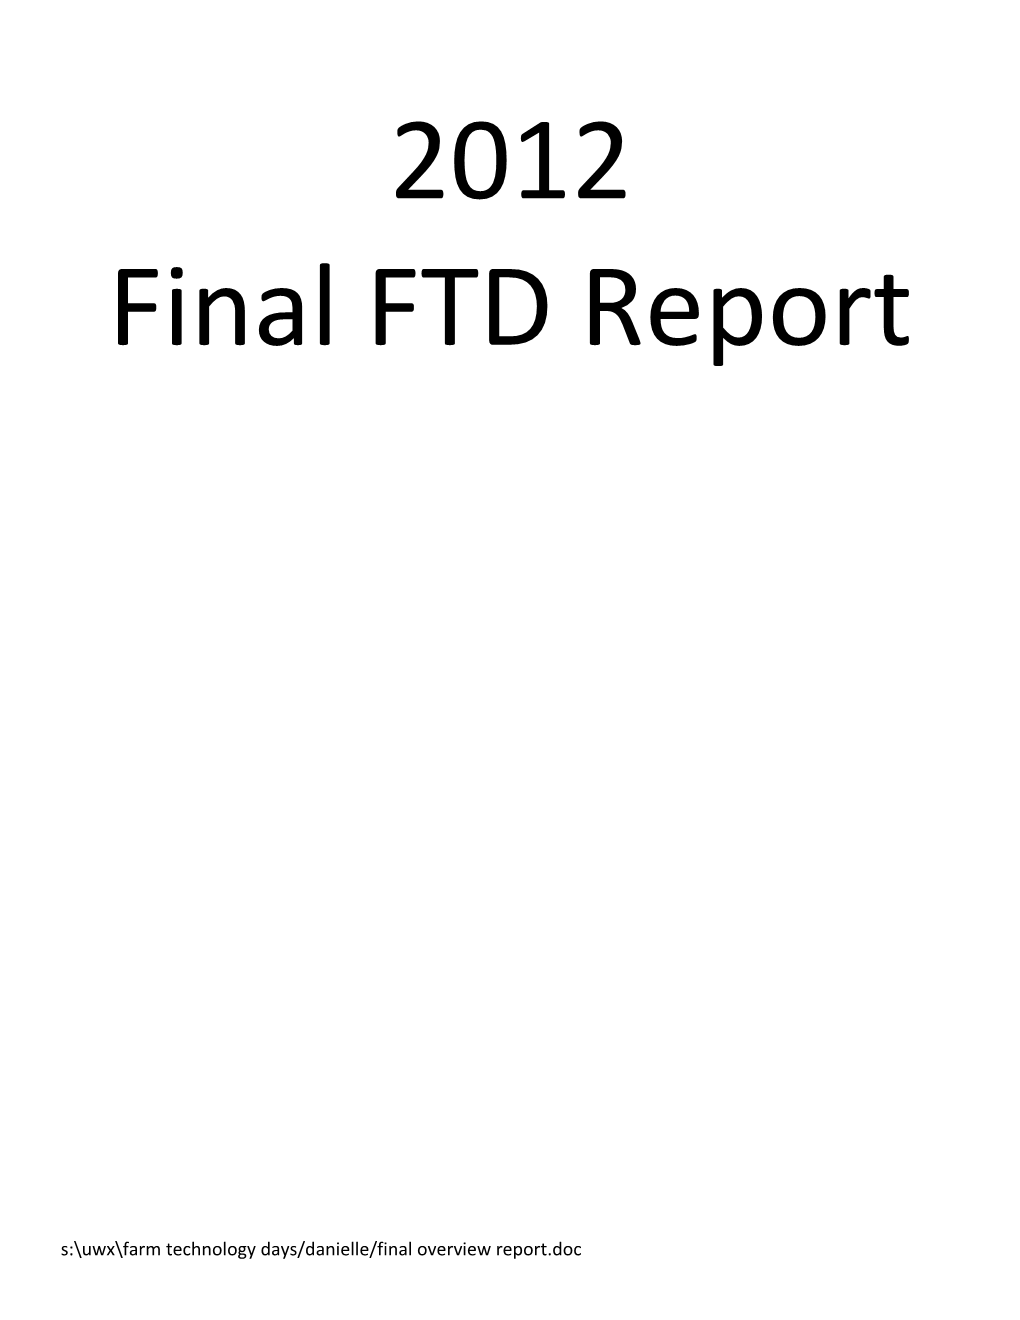 Final FTD Report